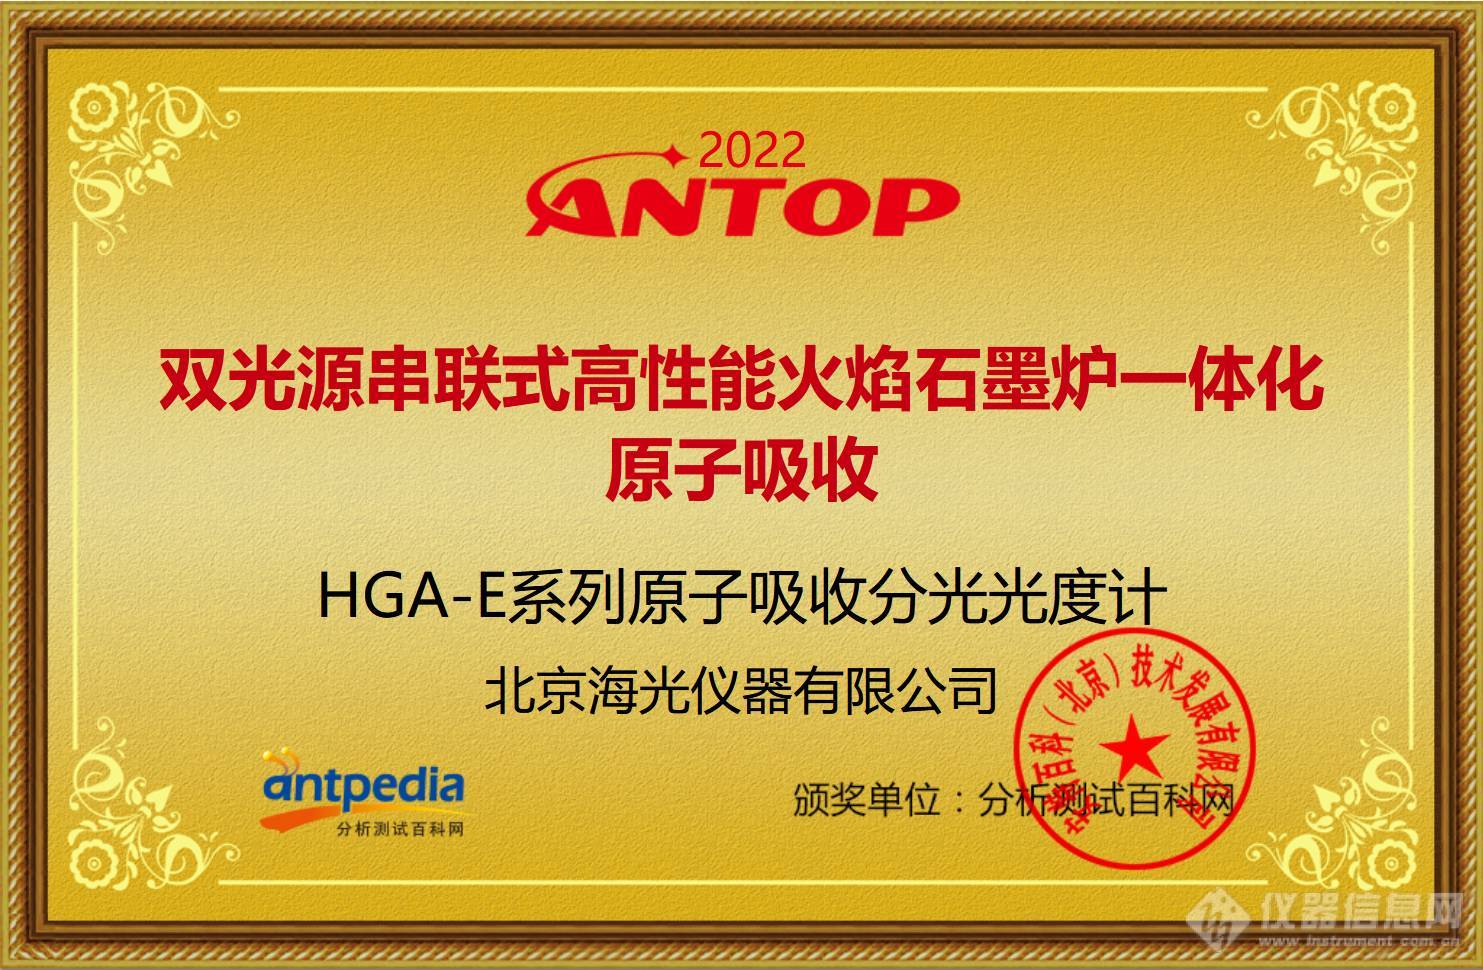 HGA-E系列原子吸收分光光度计2022年ANTOP奖(1).jpg